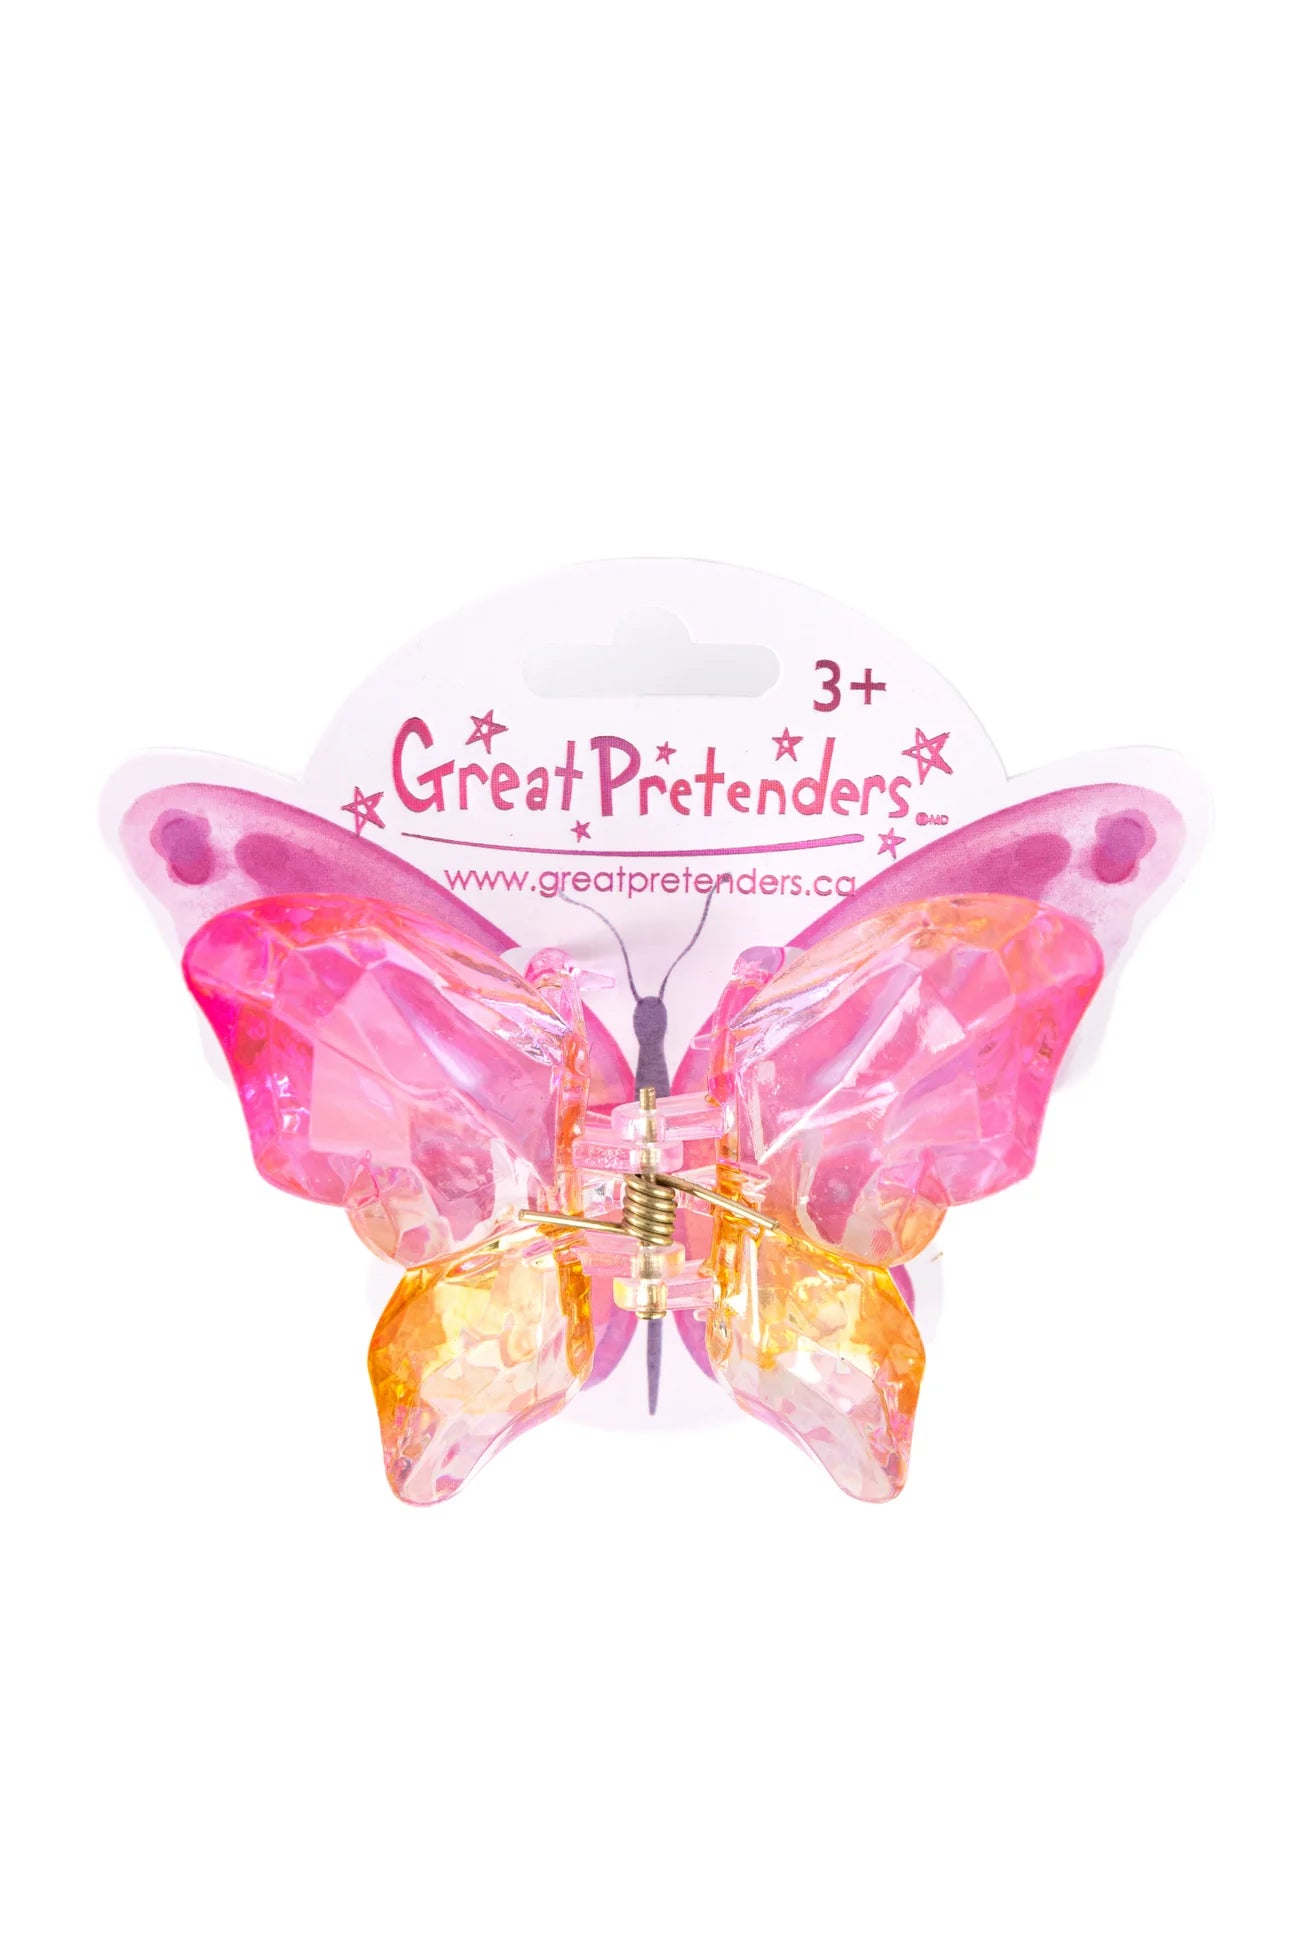 Flights of Fancy Butterfly Hairclaw by Great Pretenders # 88083